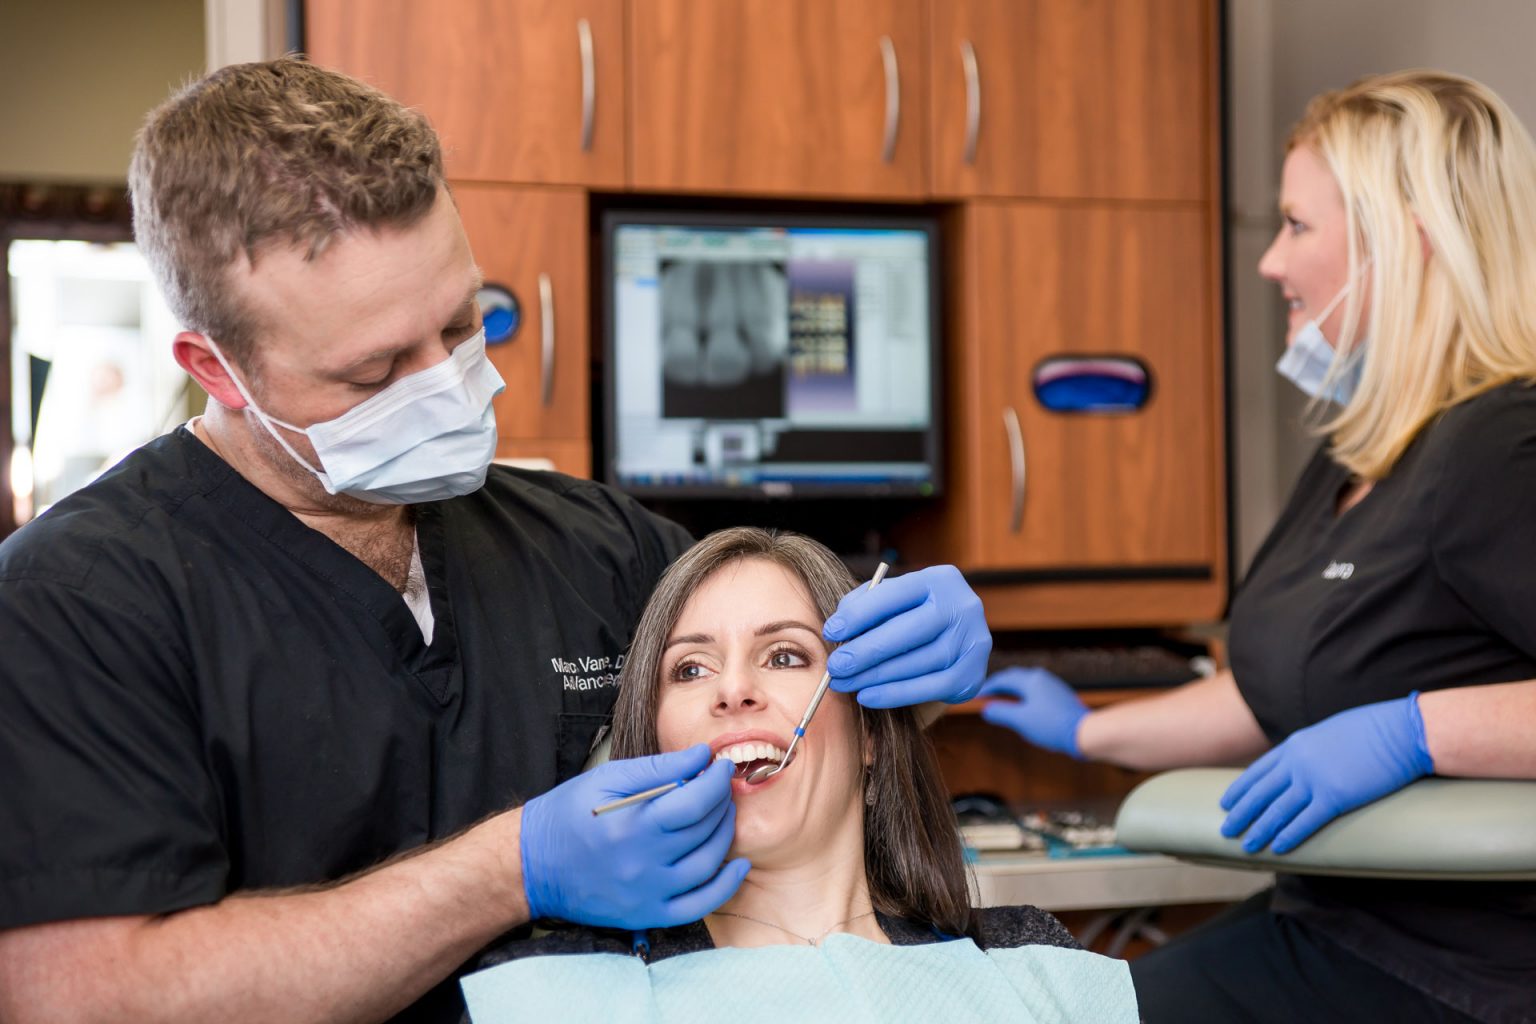 Teeth Cleaning Being Performed by Dentist